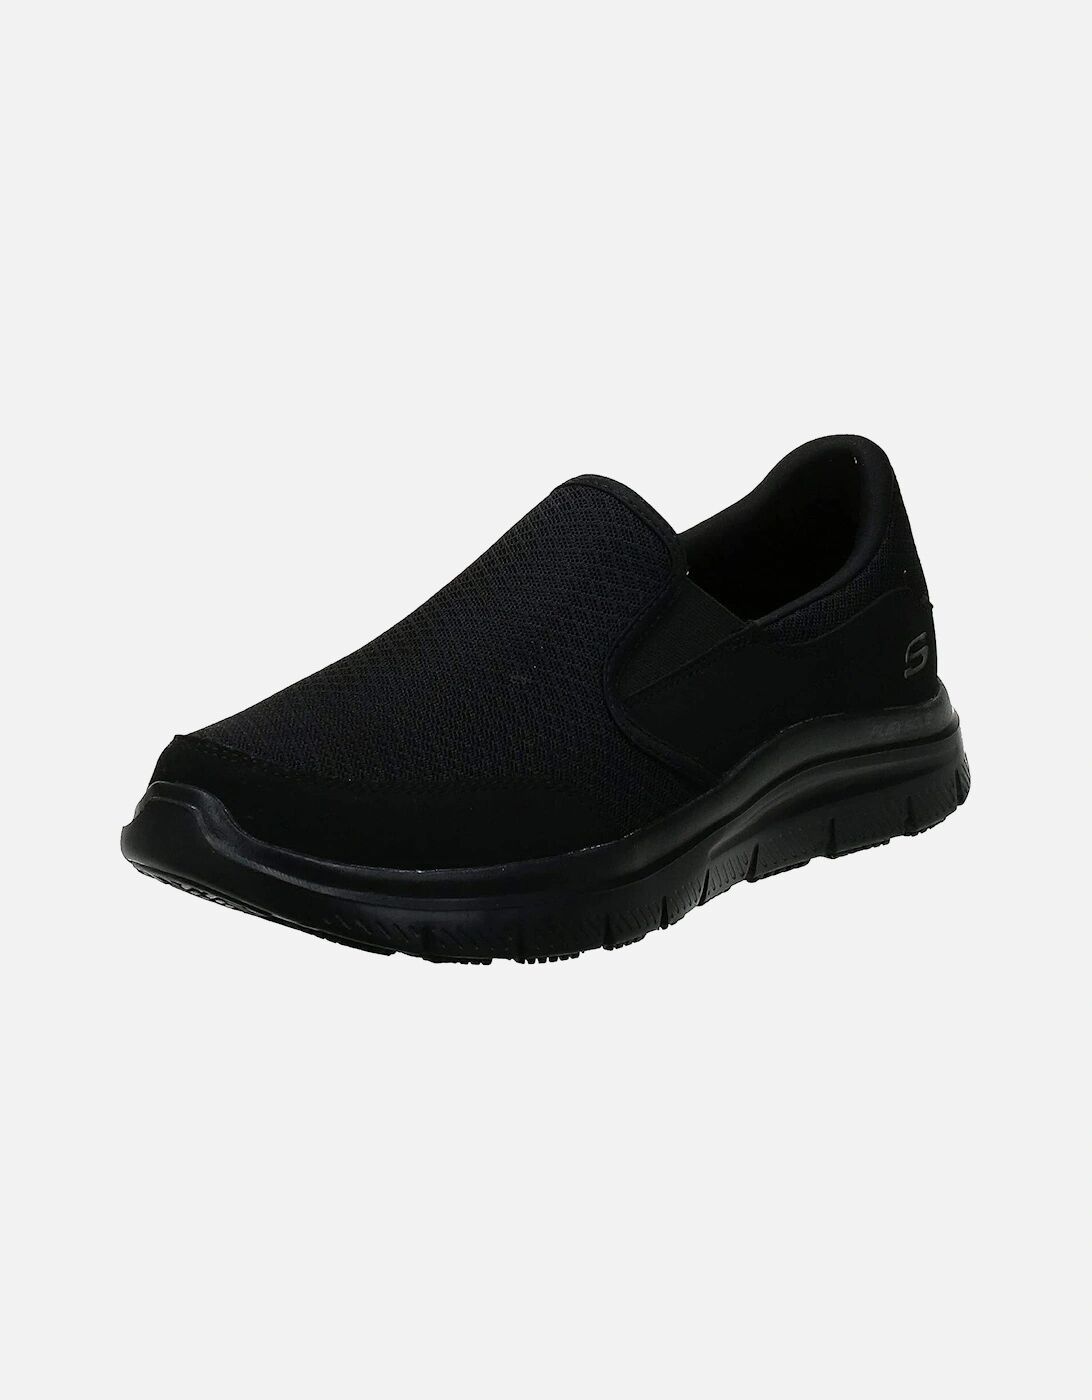 Men's Skechers Mens McAllen Wide Safety Shoes - Black - Size: 12